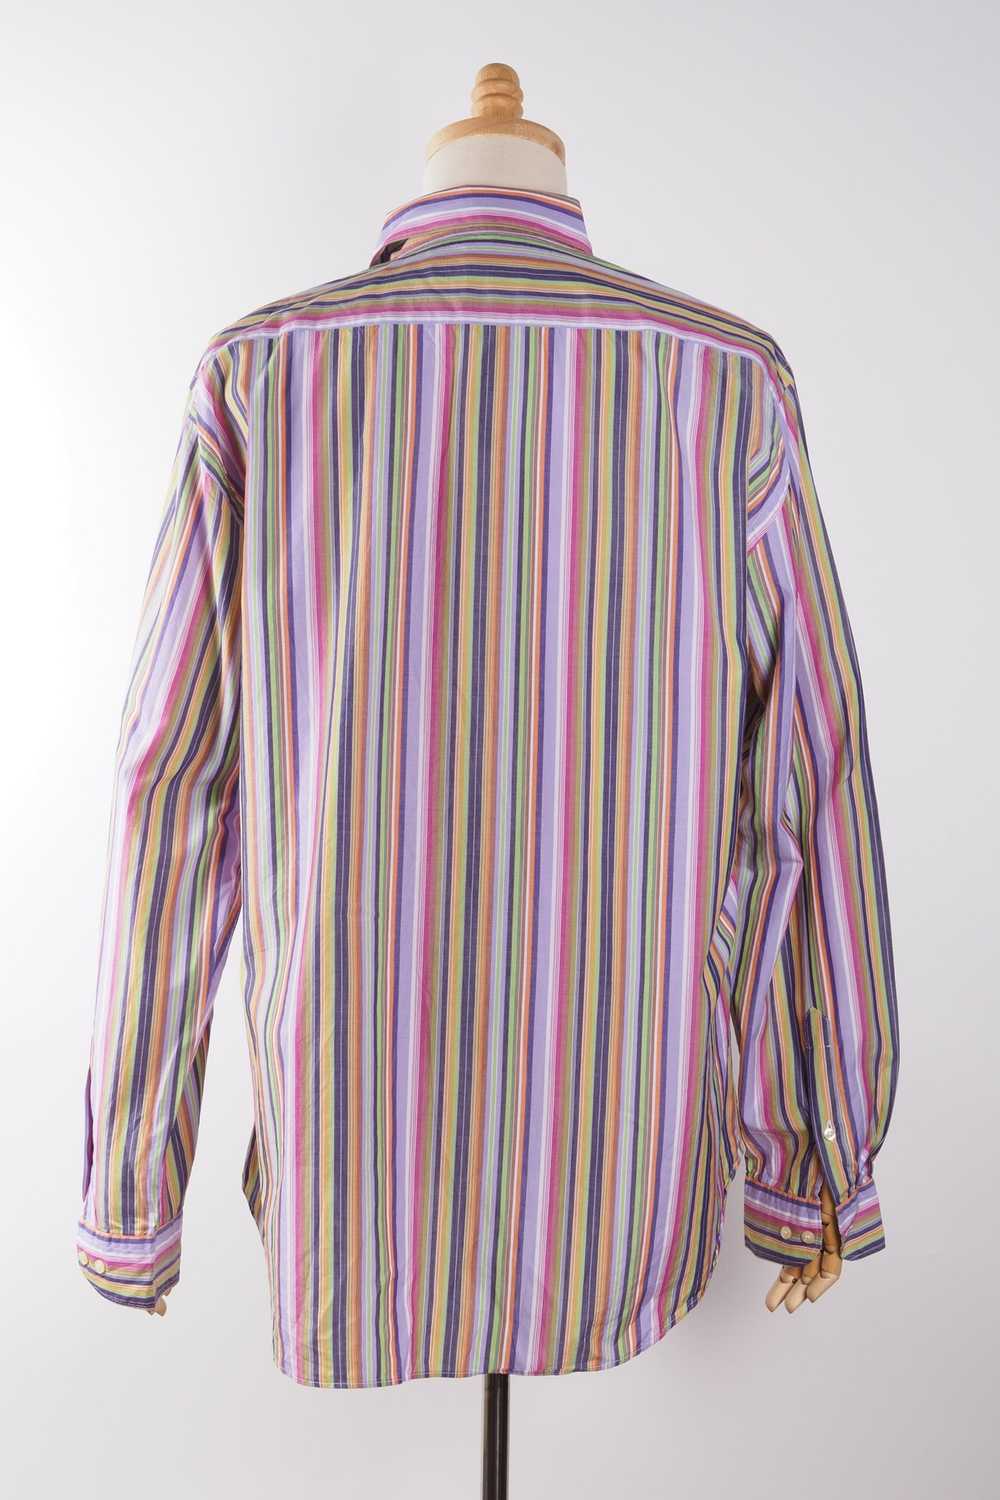 Etro Etro Milano Striped Multicolor Shirt 44 17.5… - image 2